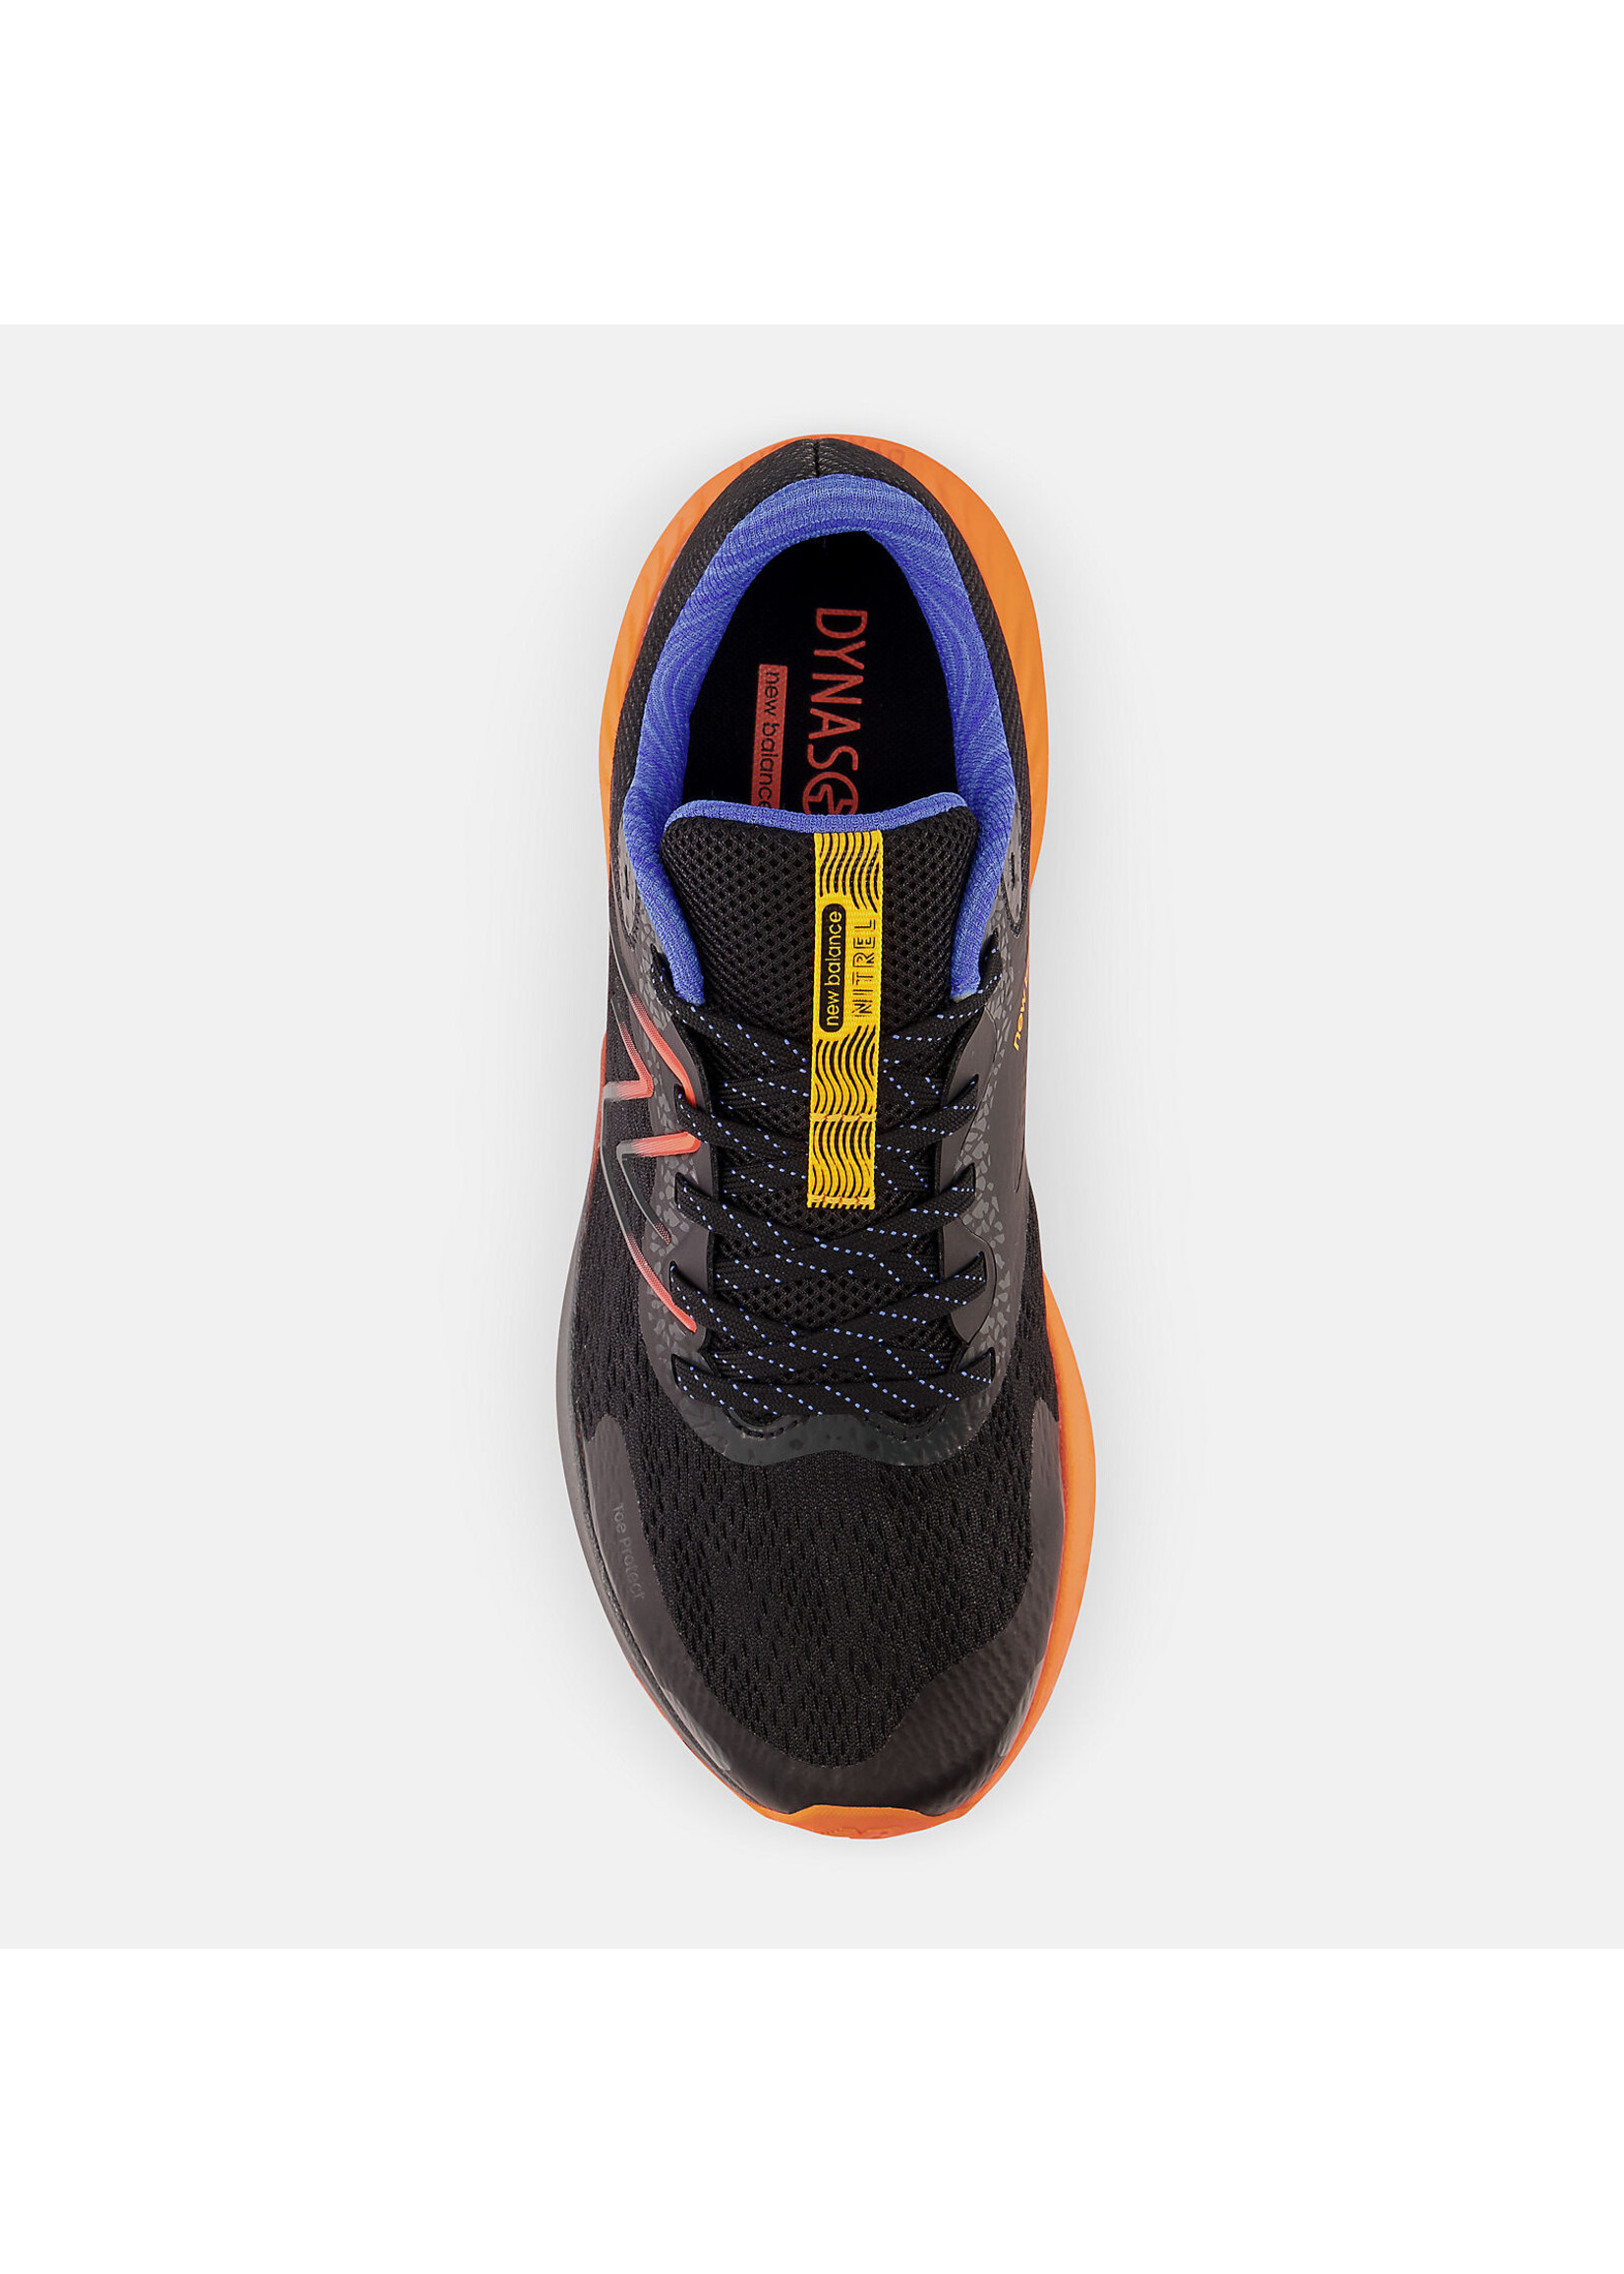 New Balance New Balance Nitrel V5 Men’s Trail Running Shoes, Black/Orange/Blue